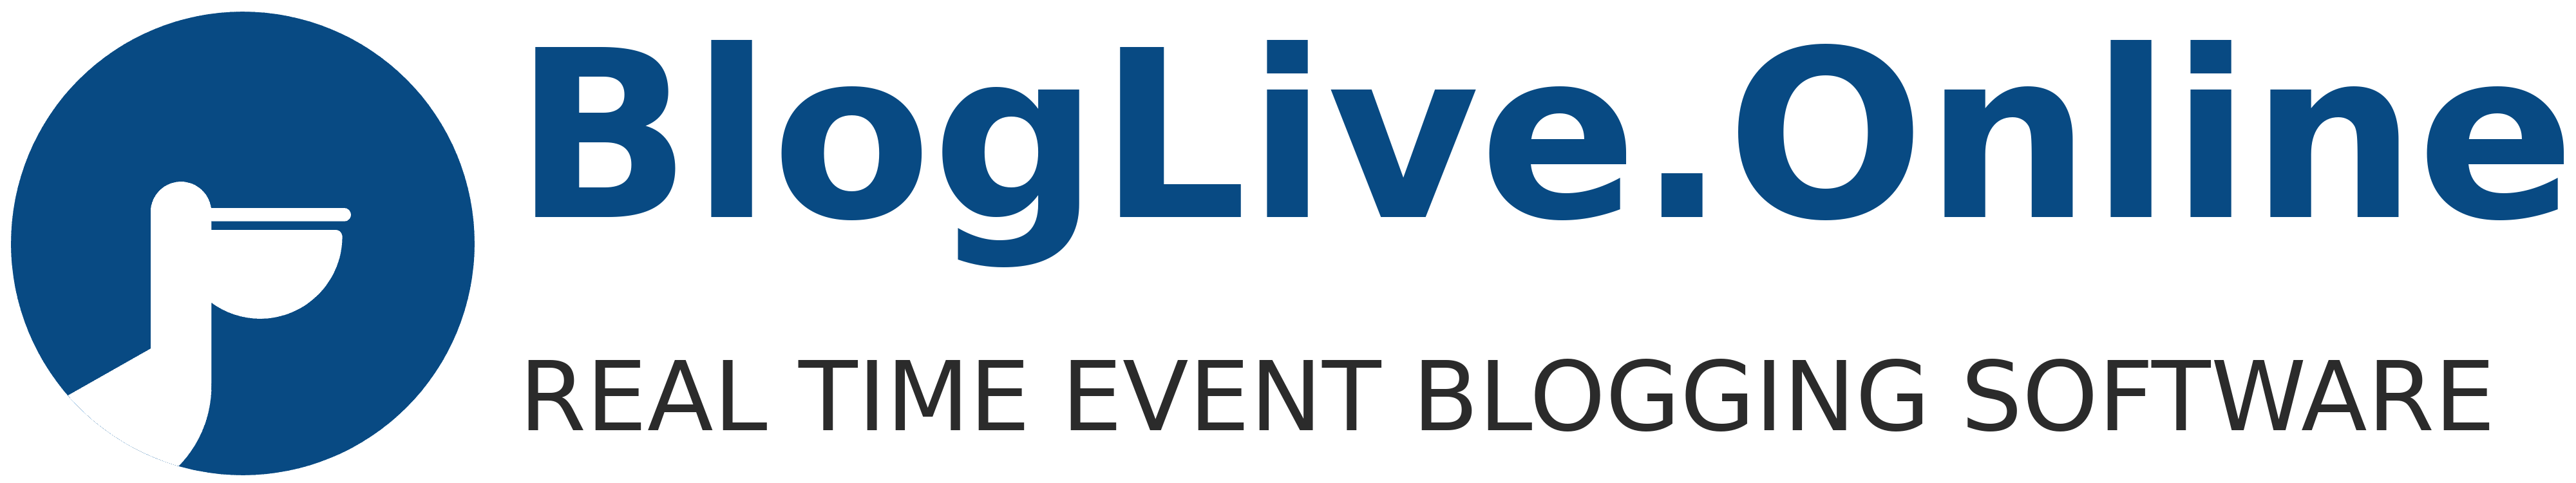 BlogLive.Online logo